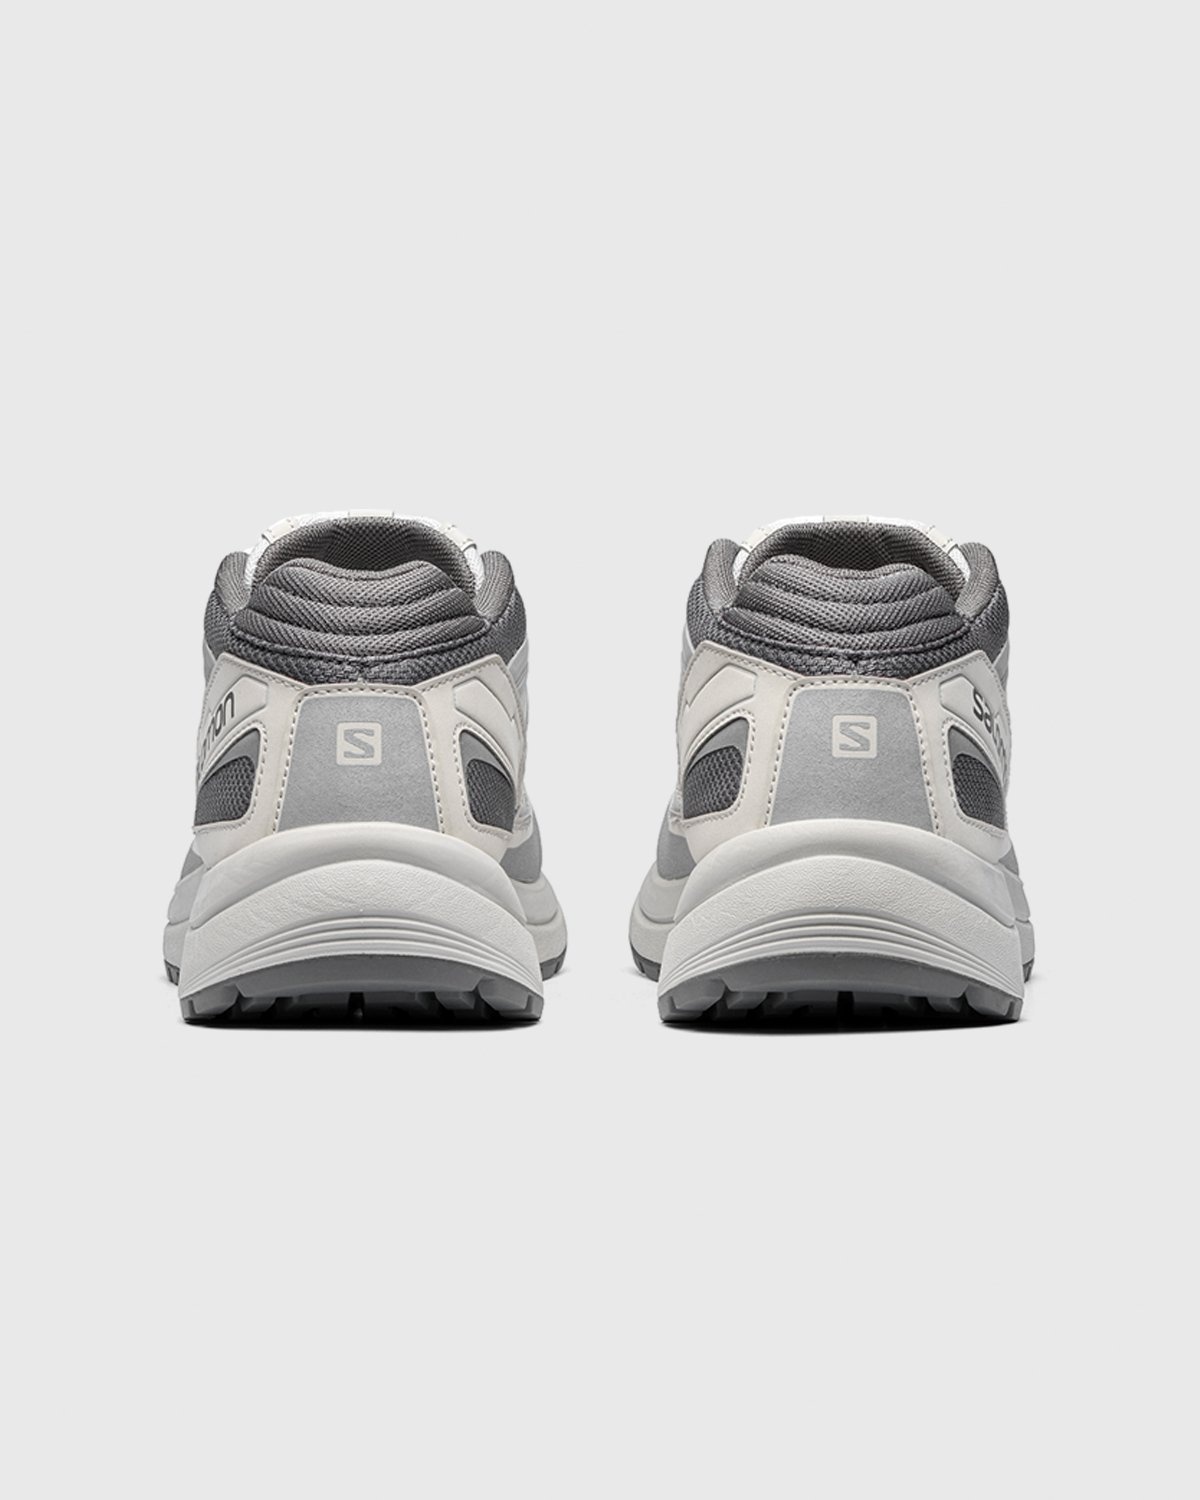 Salomon – Odyssey 1 Advanced Grey - Low Top Sneakers - Grey - Image 3